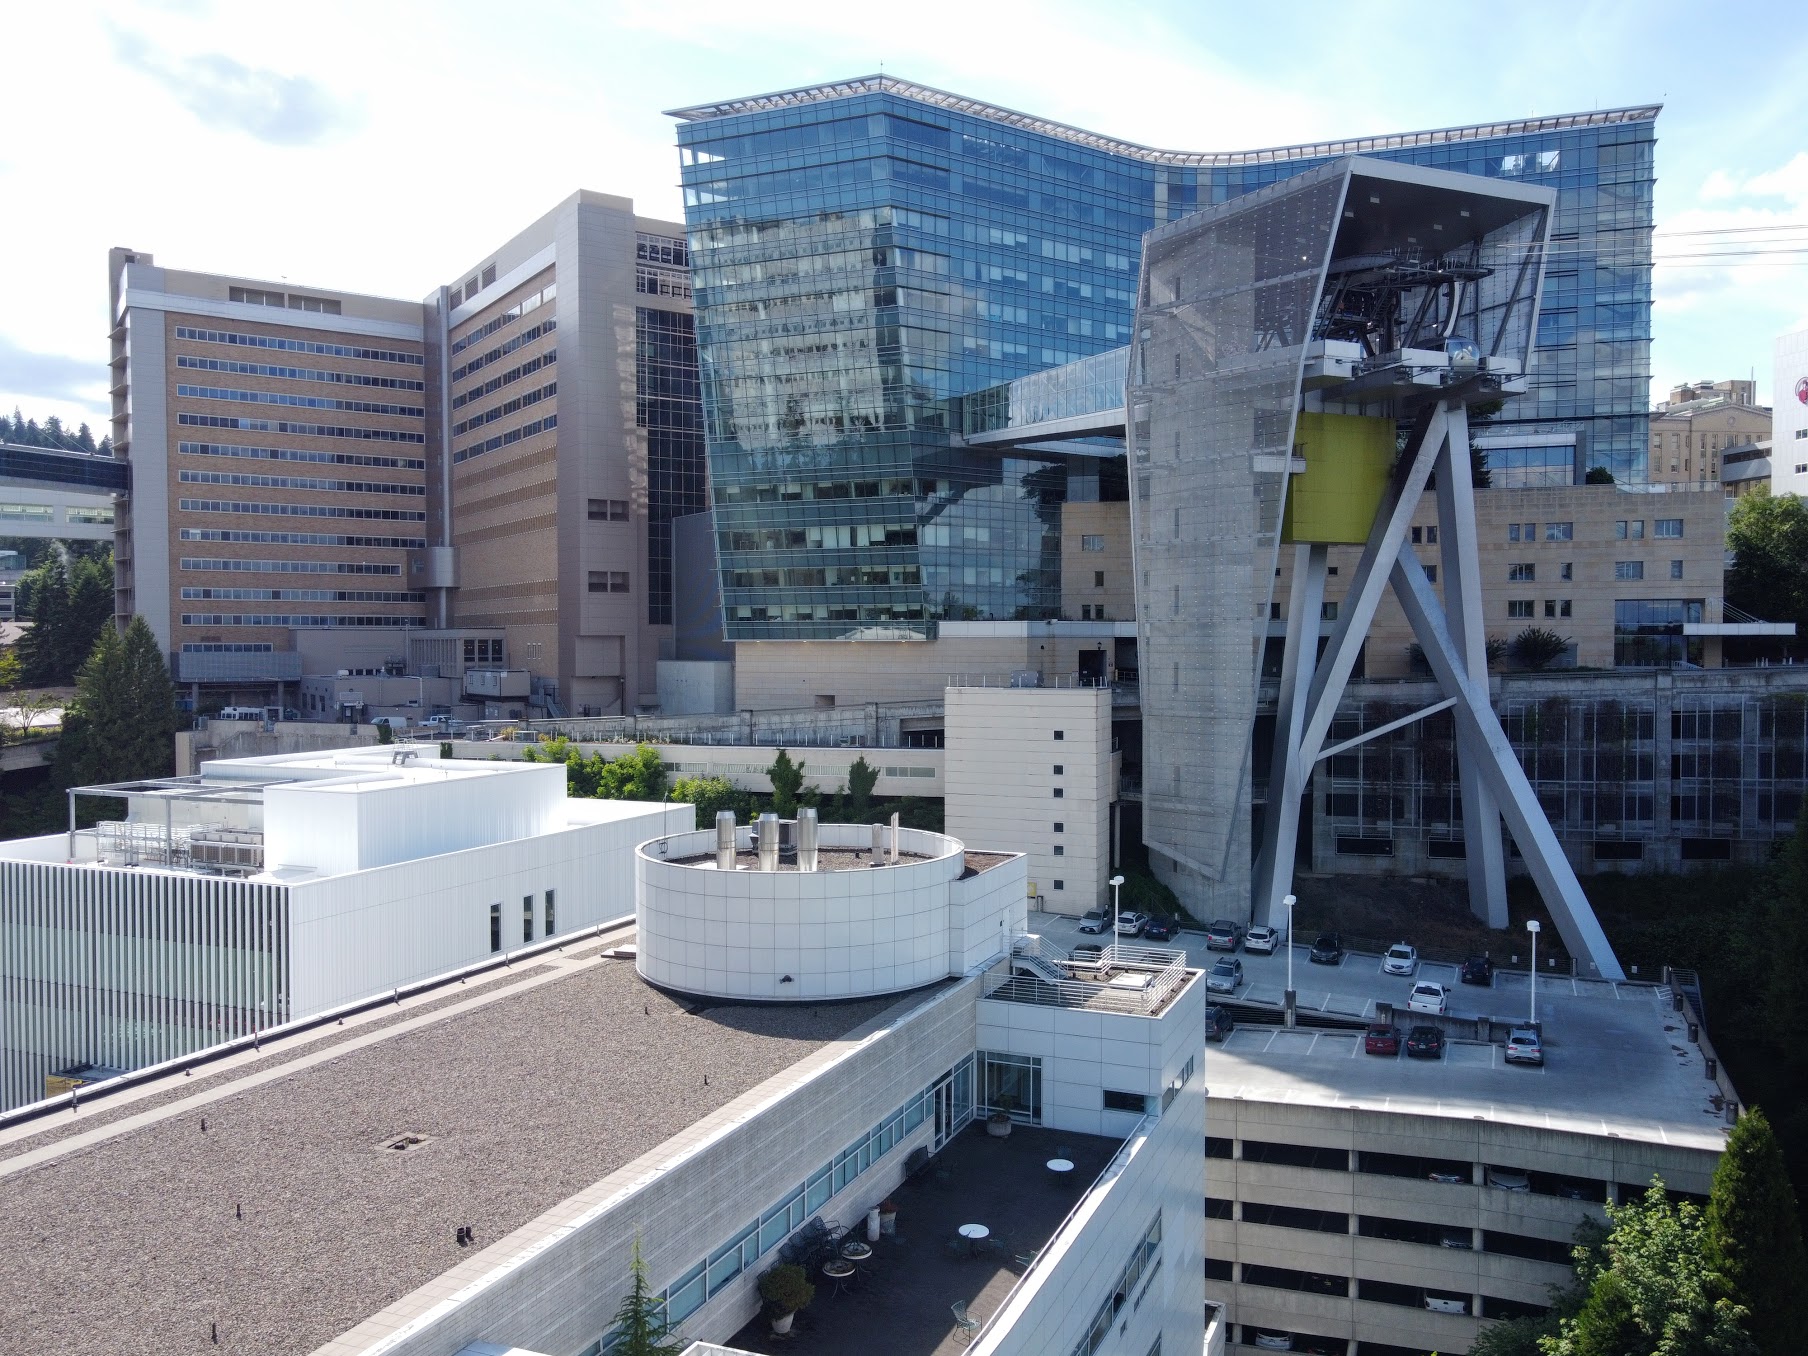 OHSU Hospital Drone View